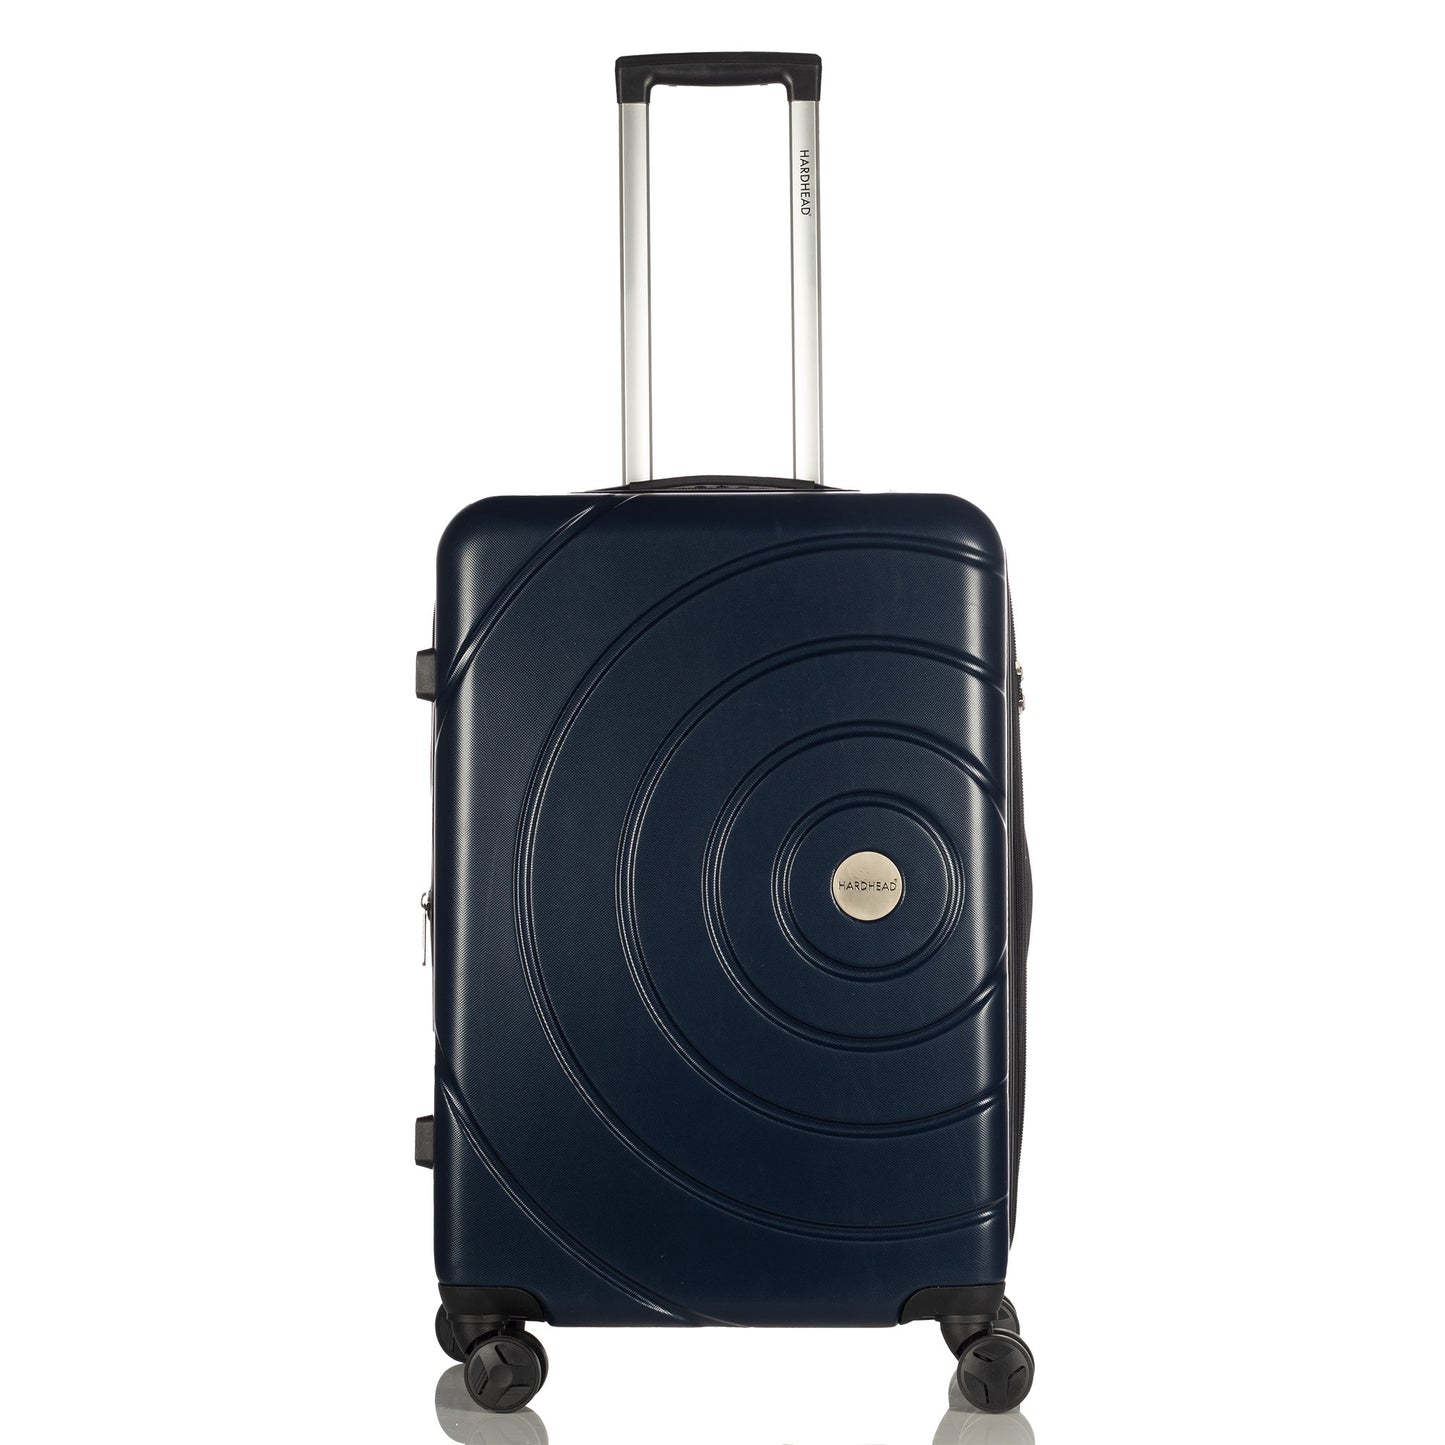 Hardhead Luggage (20/24/28") Eco Hardside Travel Suitcase with 4 360 Wheels Lock Included, Blue